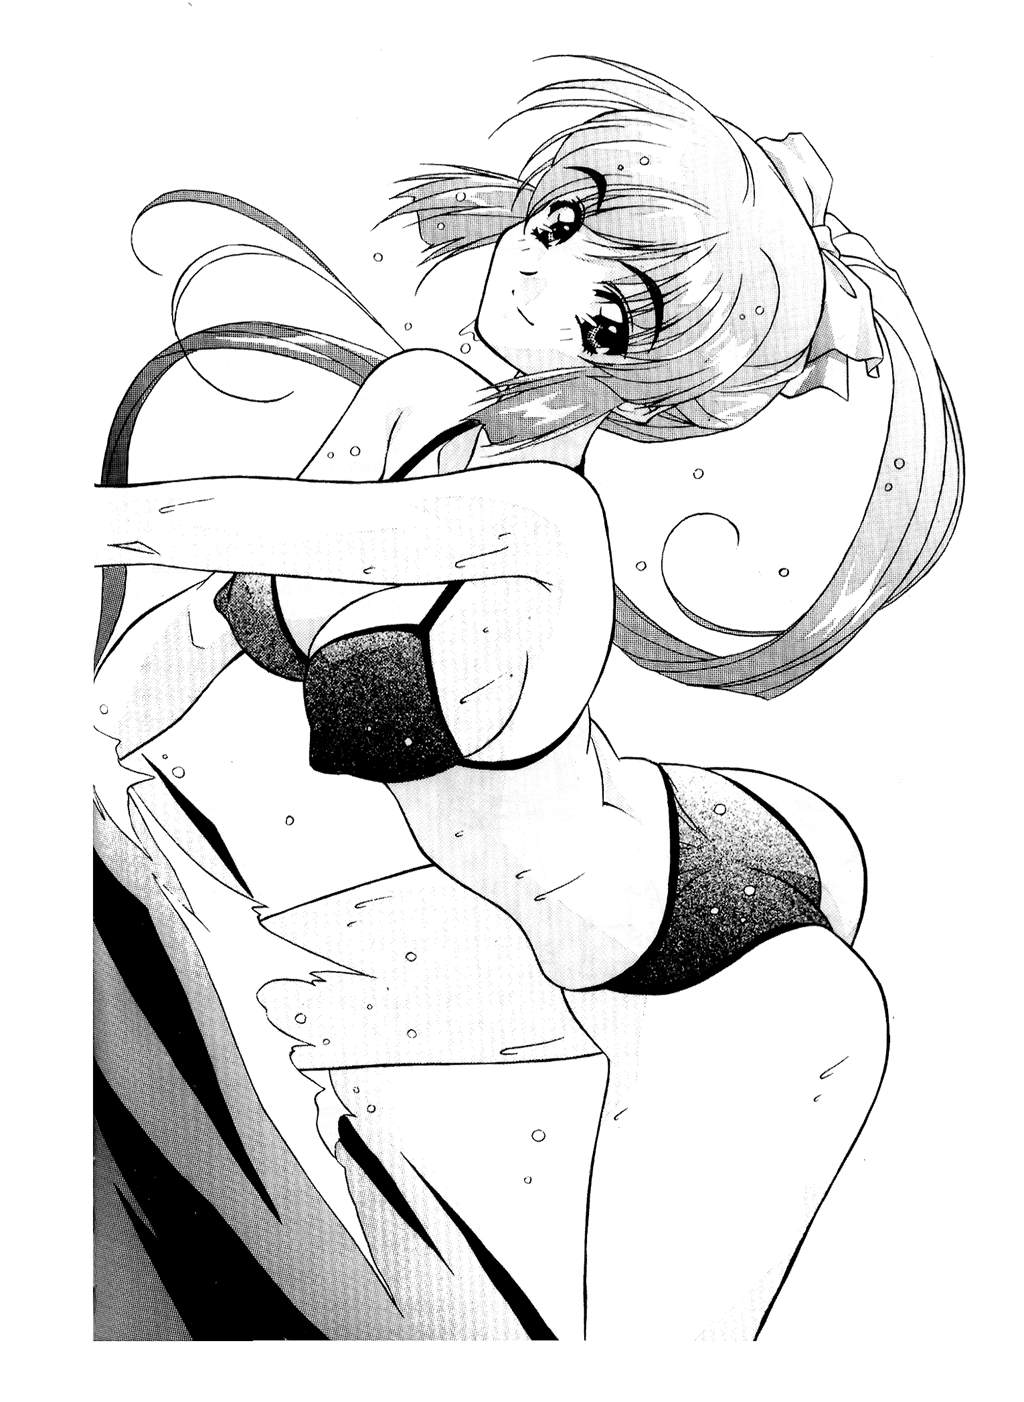 Le dessin du Manga 04 - Personnages feminin, Attitudes, Expressions numero d'image 121